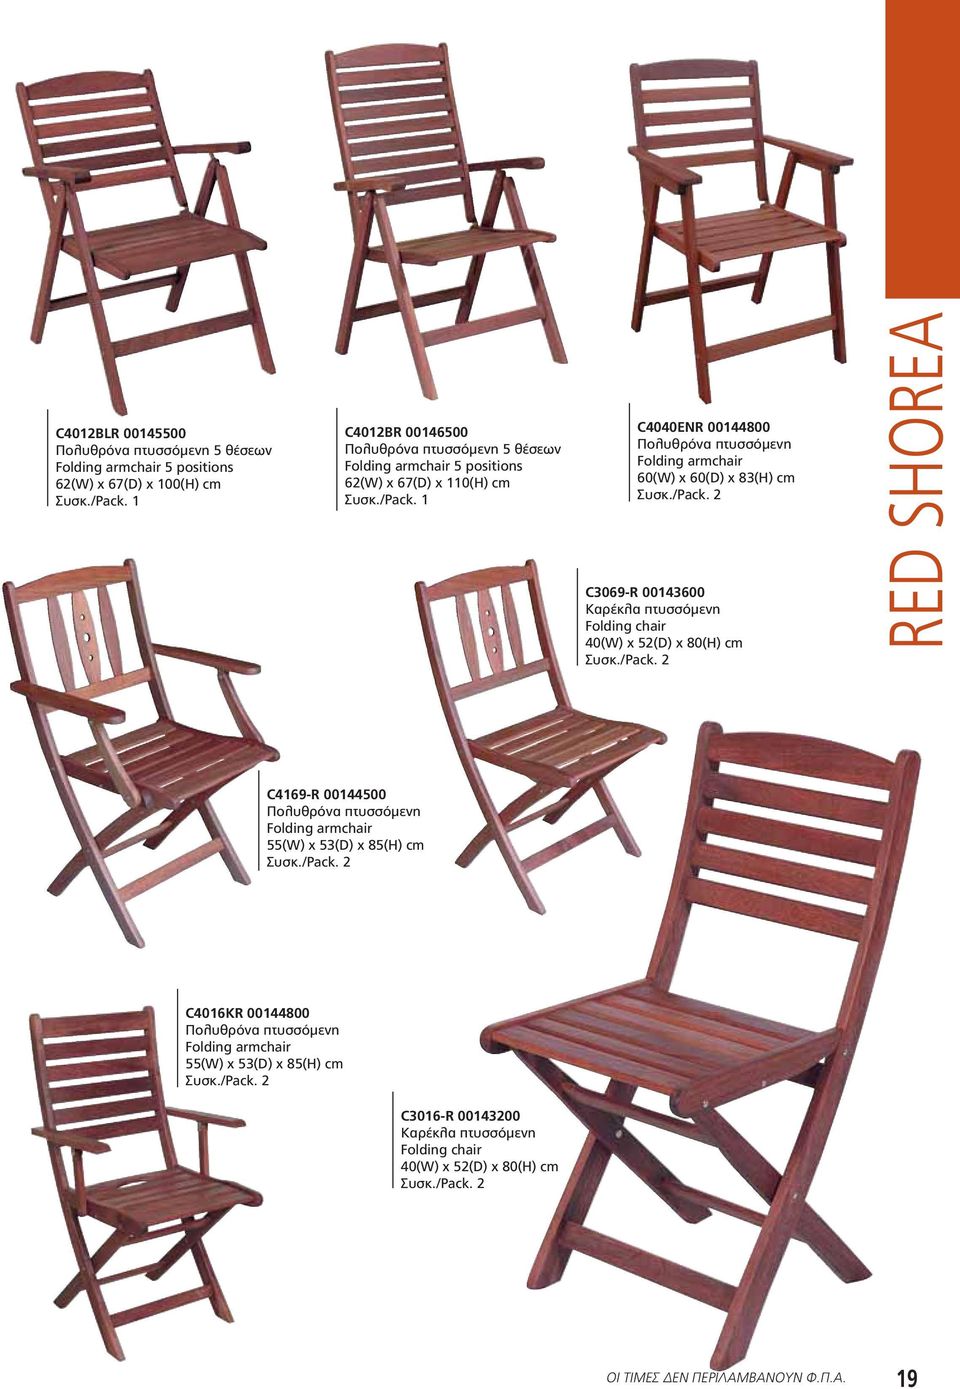 1 C4040ENR 00144800 Πολυθρόνα πτυσσόμενη Folding armchair 60(W) x 60(D) x 83(H) cm C3069-R 00143600 Καρέκλα πτυσσόμενη Folding chair 40(W) x 52(D) x 80(H) cm RED